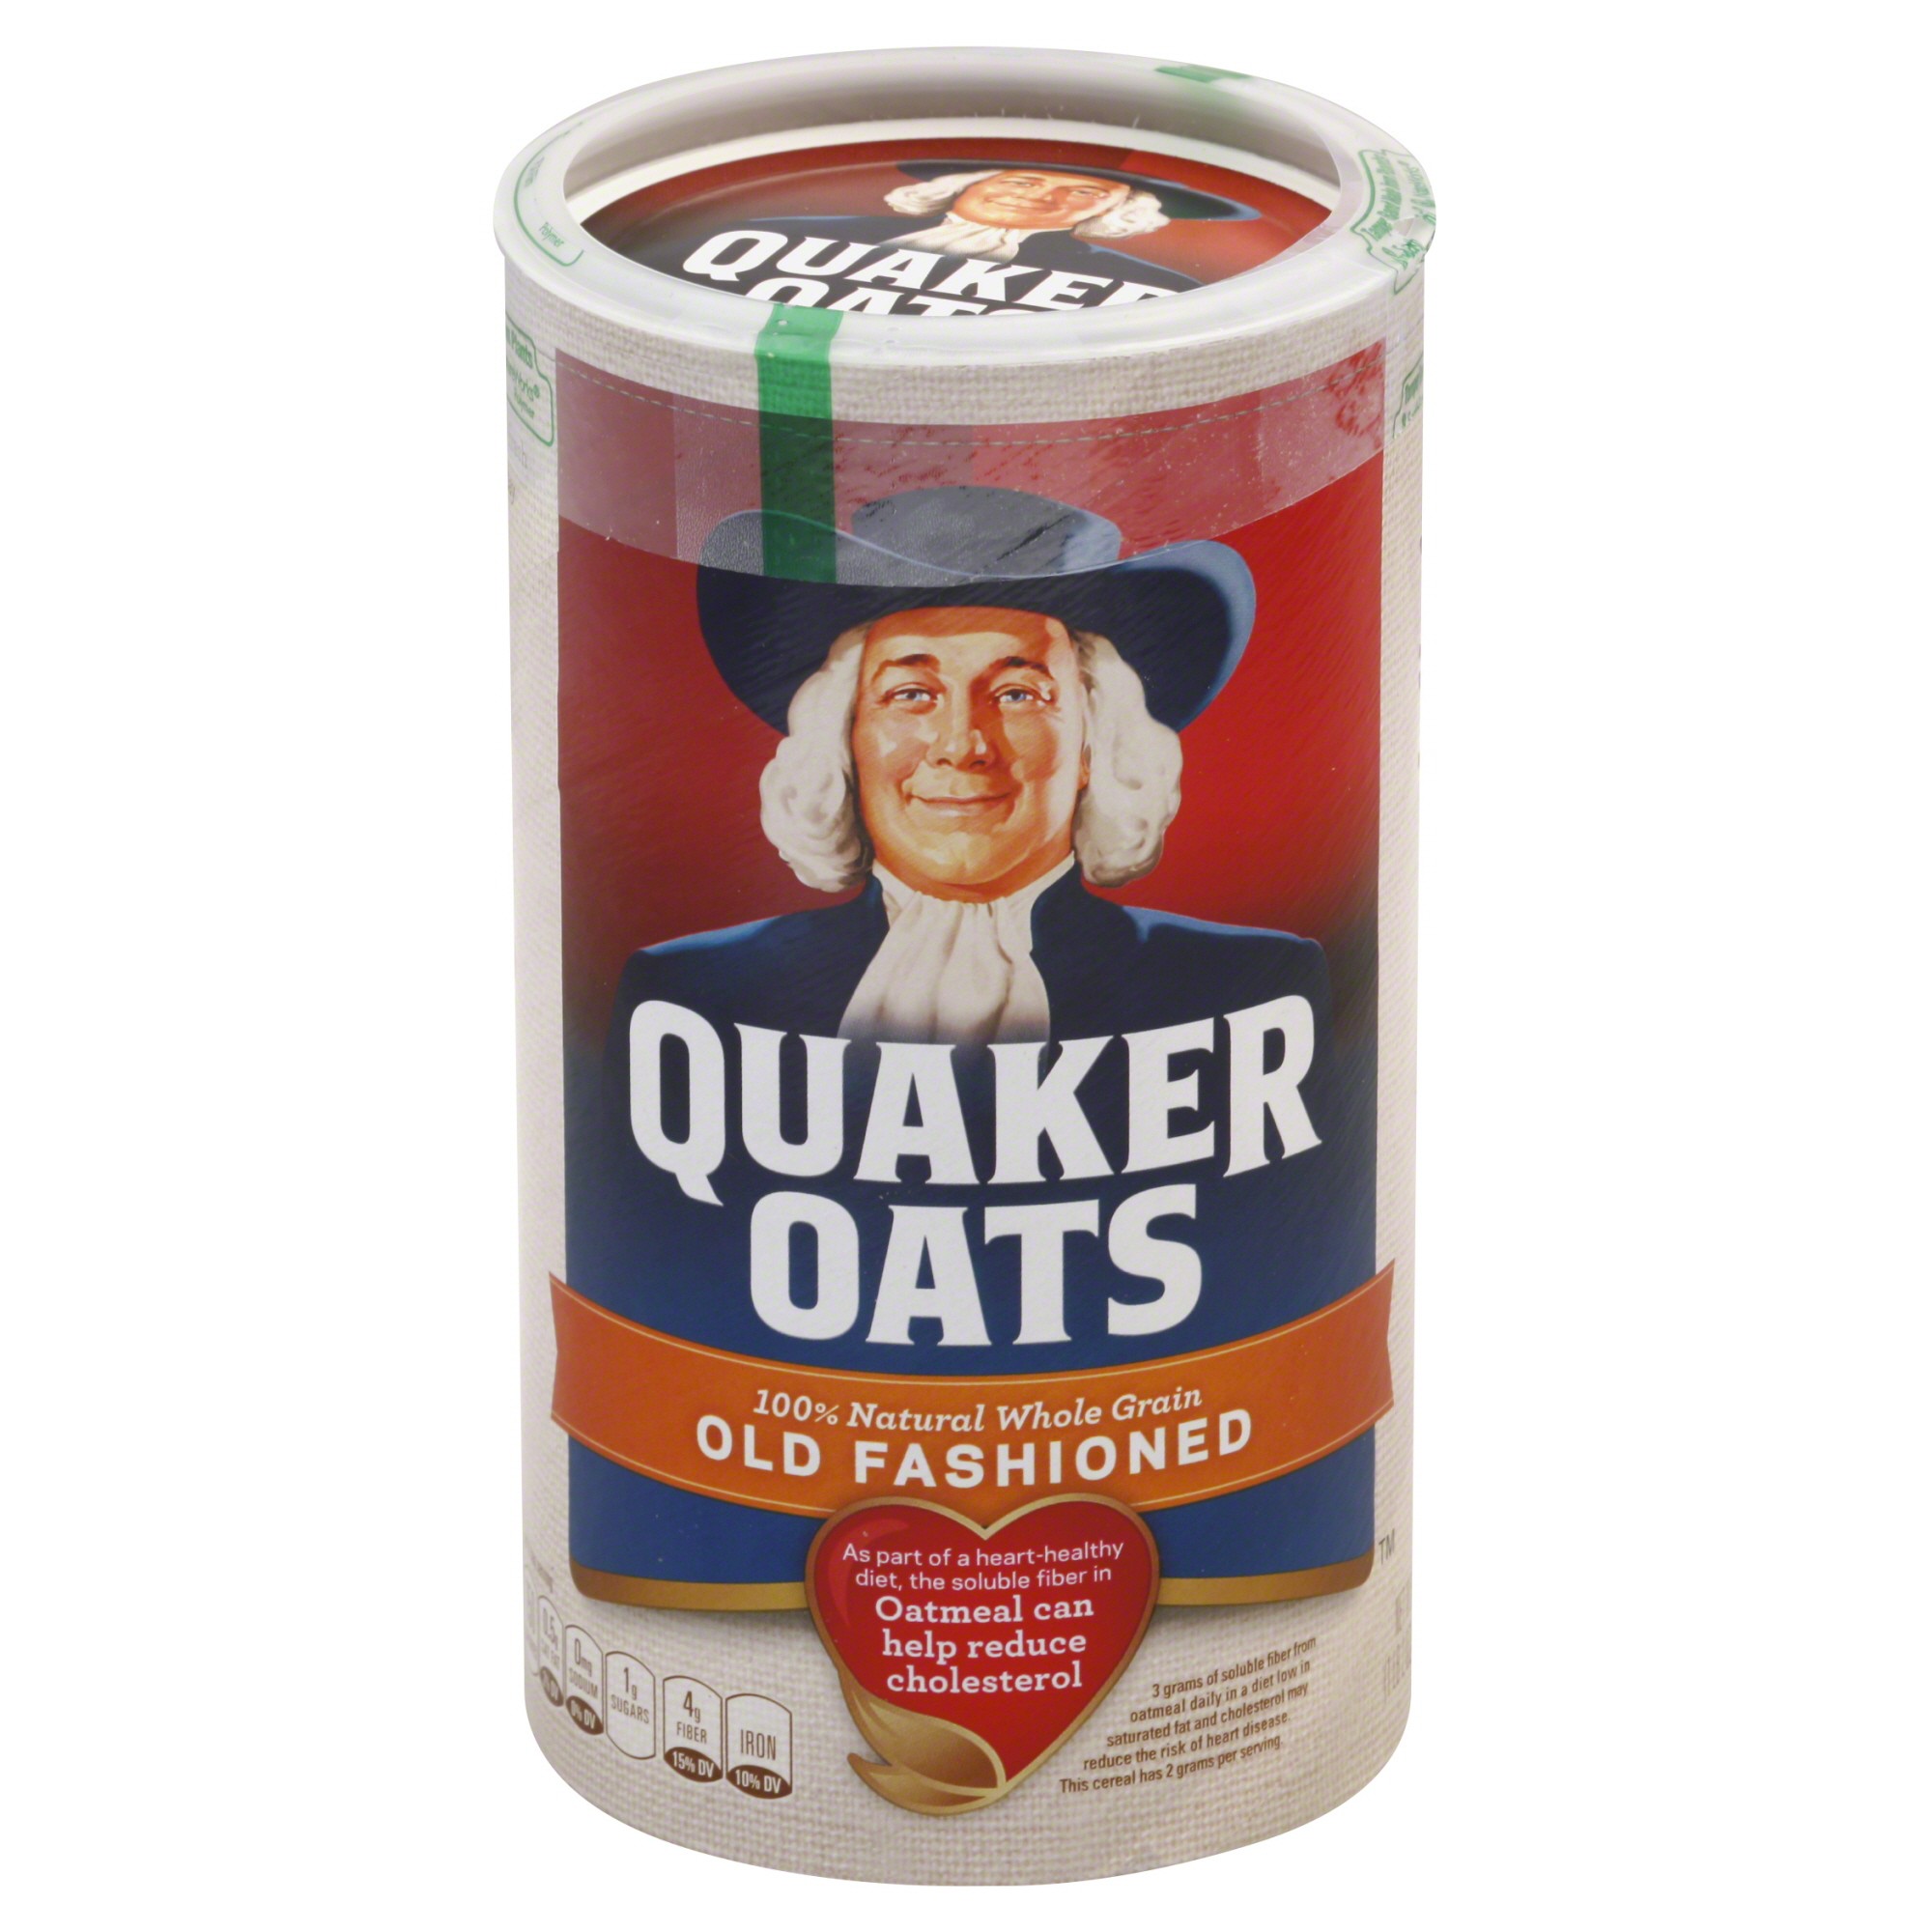 Quaker Oats Old Fashioned 8 oz